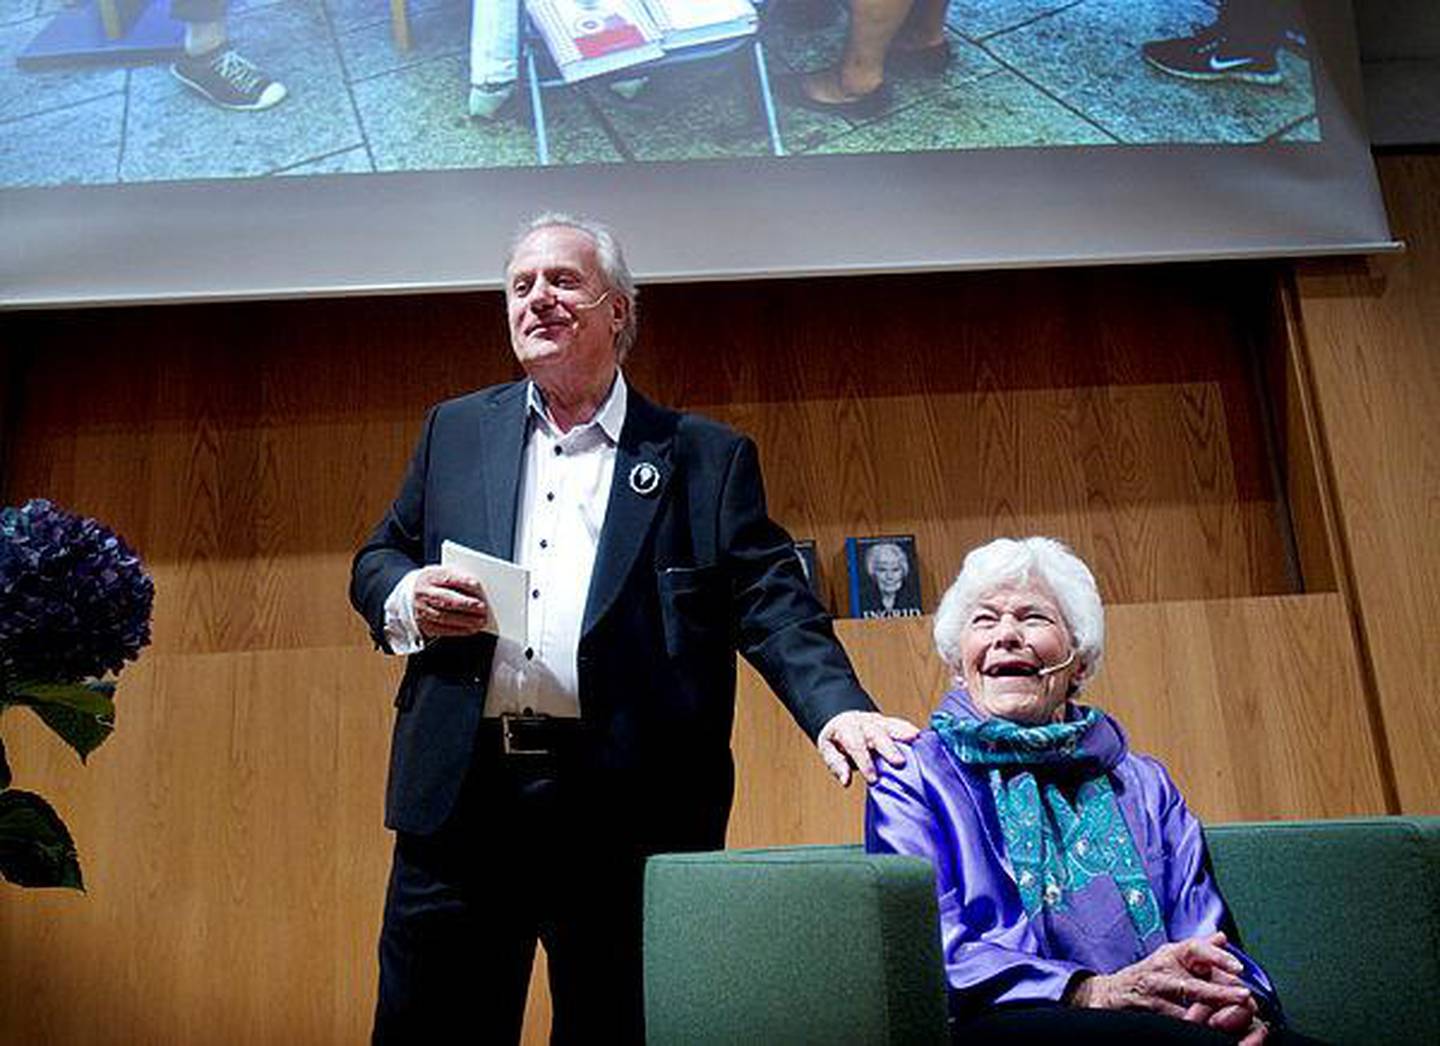 Ingrid Espelid Hovig med biograf Ingar Sletten Kolloen ved lanseringen av biografien "Ingrid", 2013